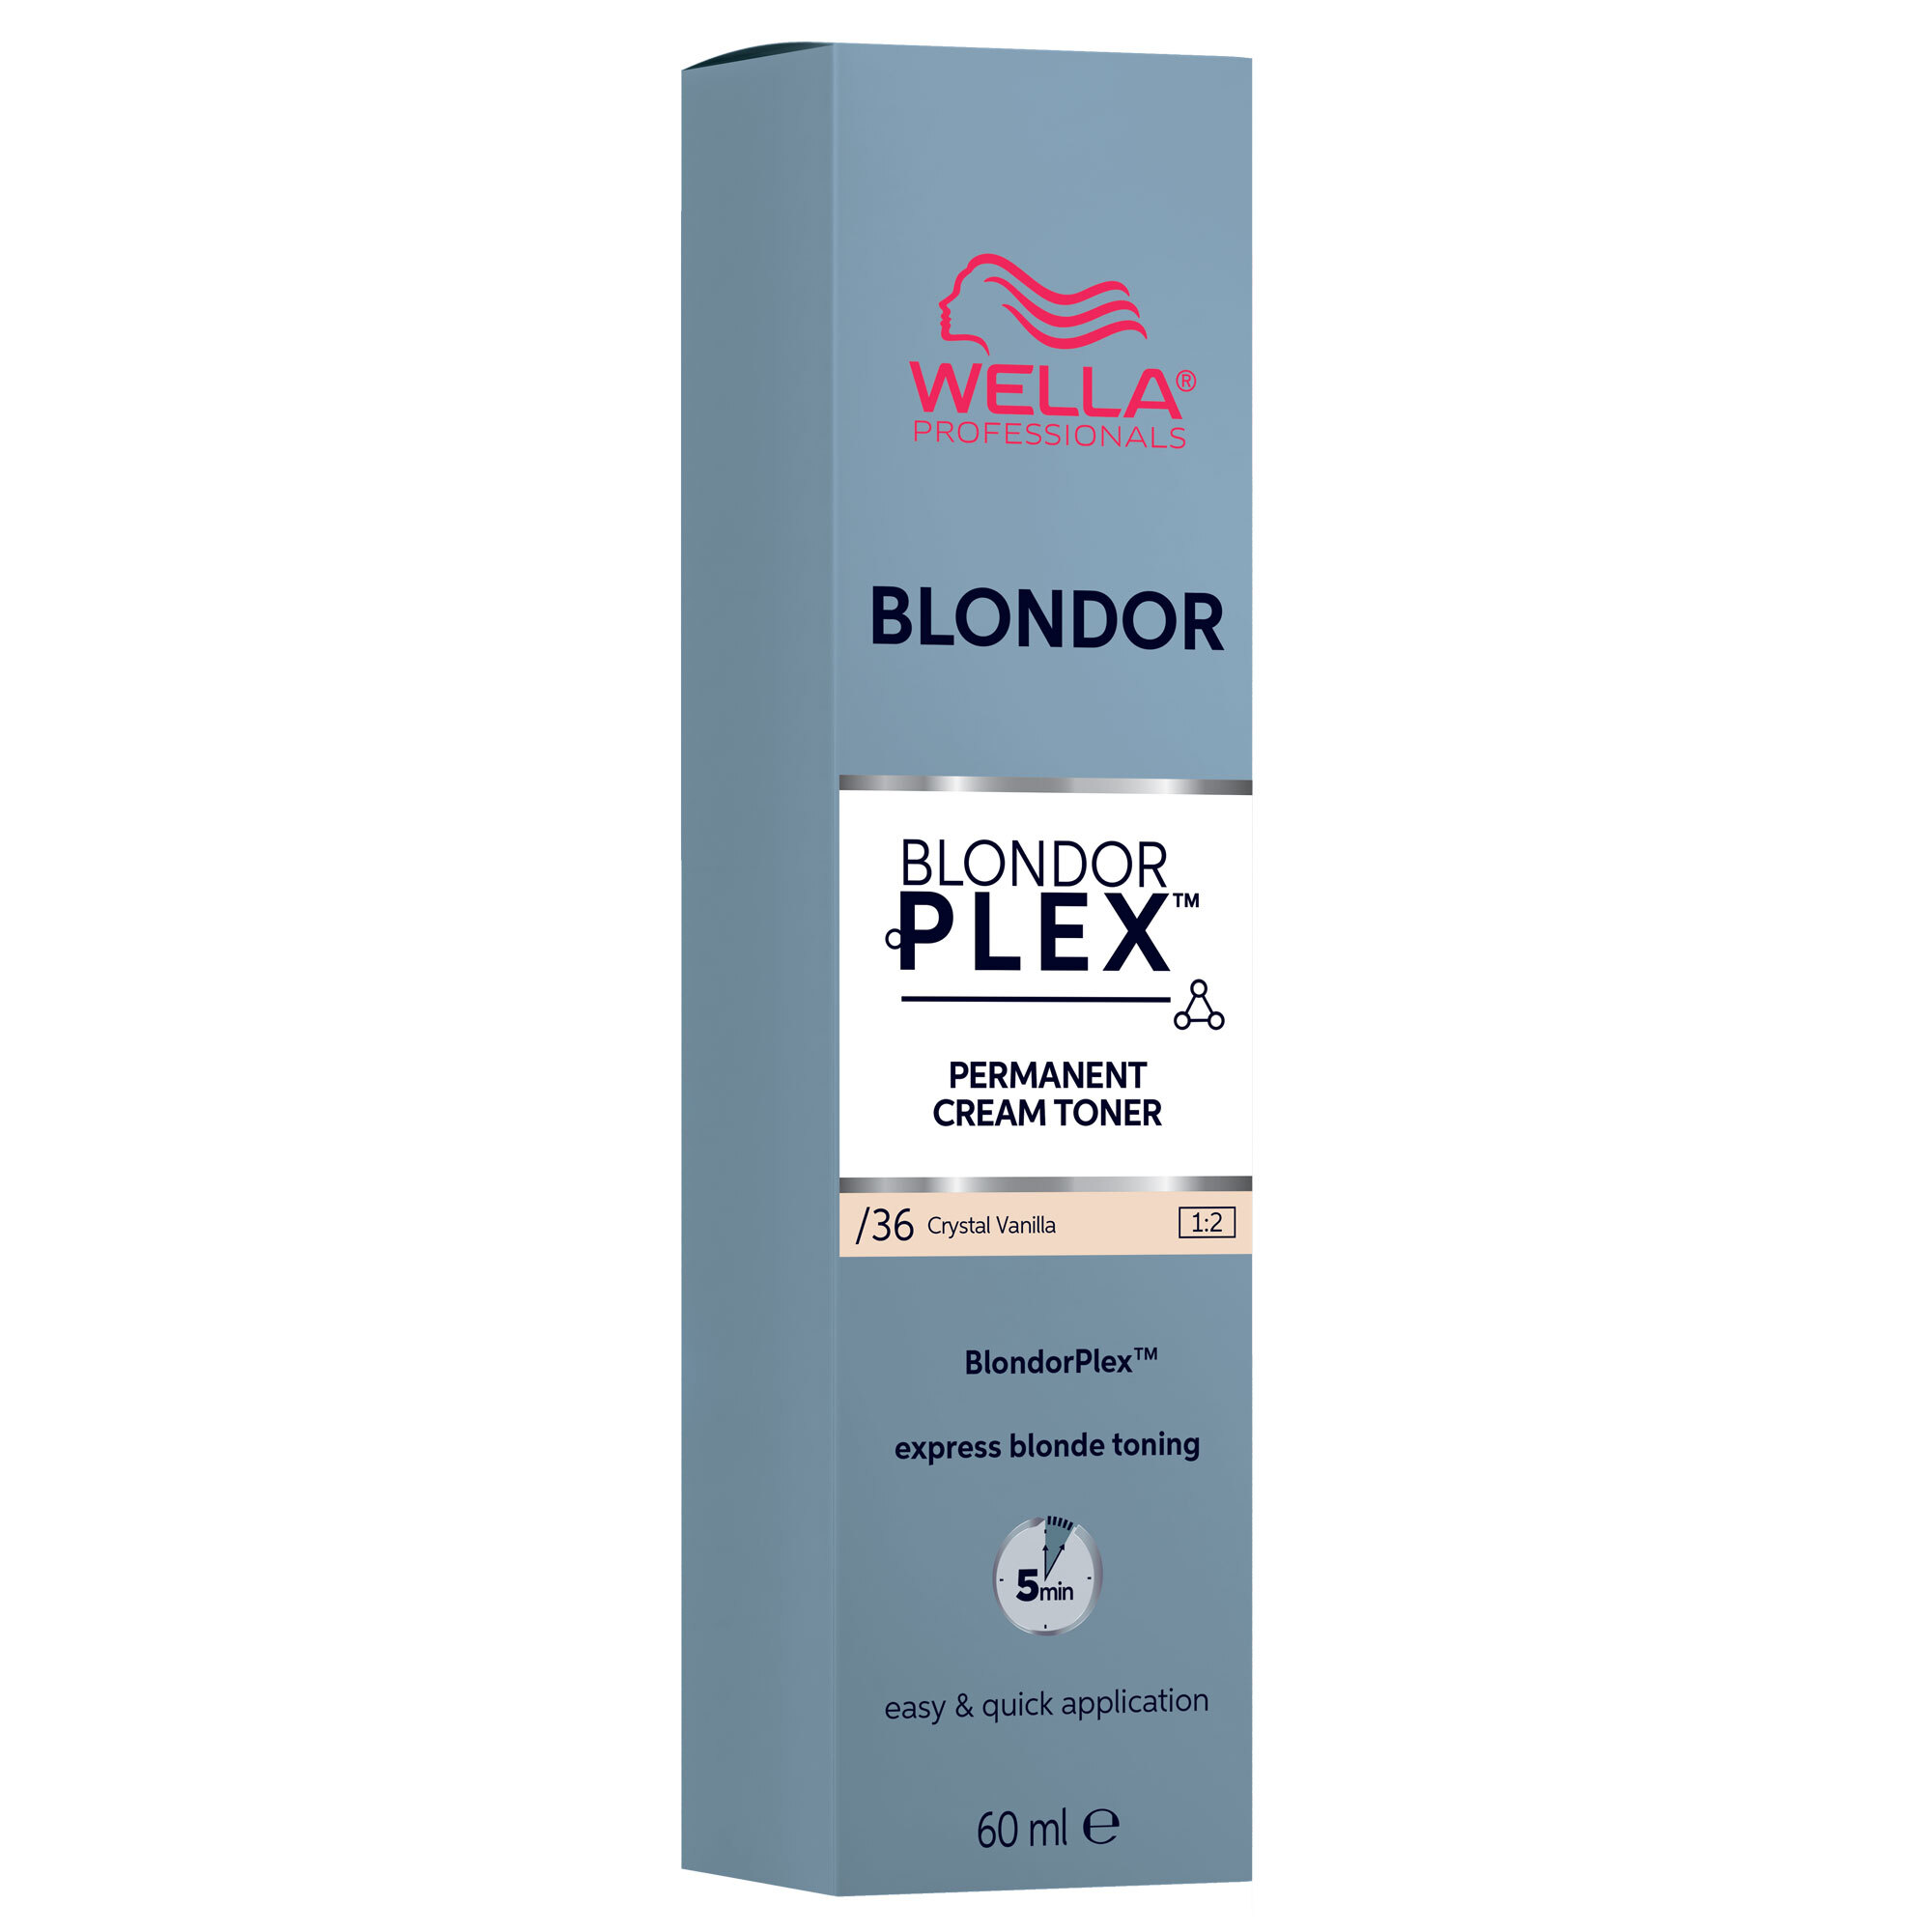 Wella BlondorPlex Cream Toner Crystal Vanilla /36